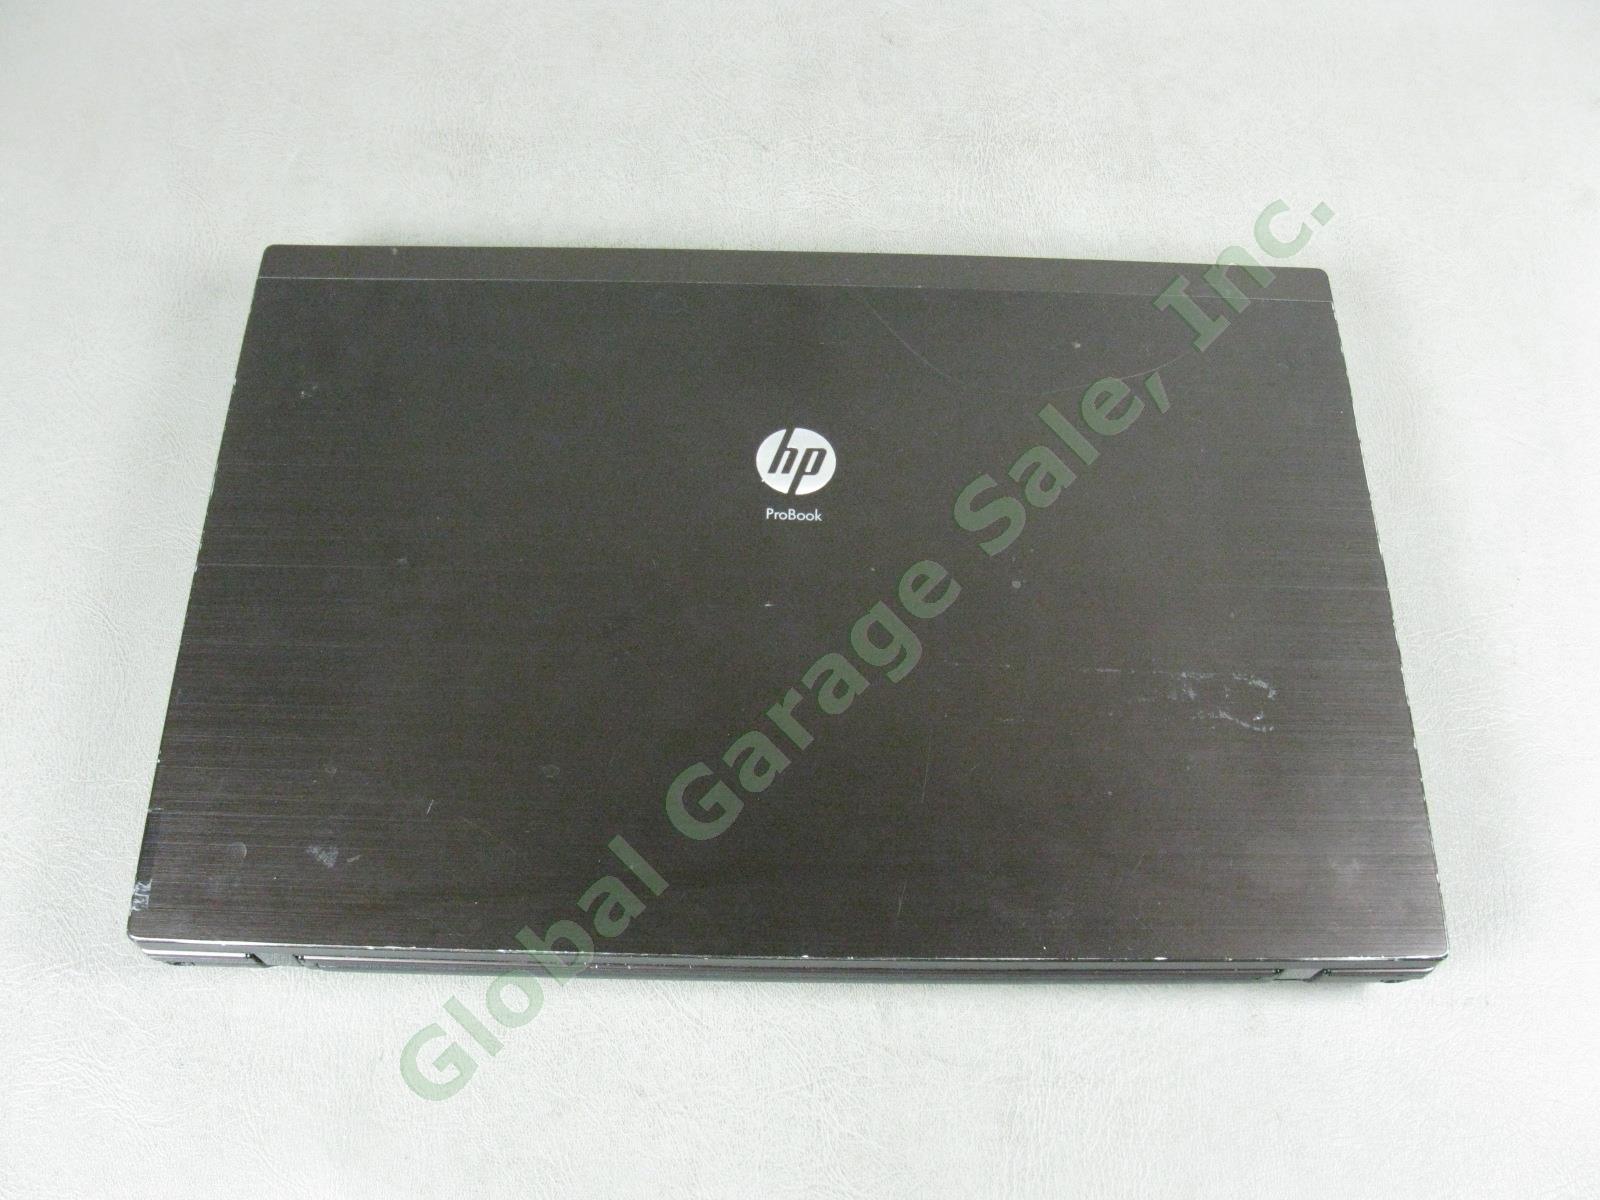 HP 4520s Laptop Computer Intel Core i5 M560 2.67GHz 2GB 500GB HDD Windows 7 Pro 3